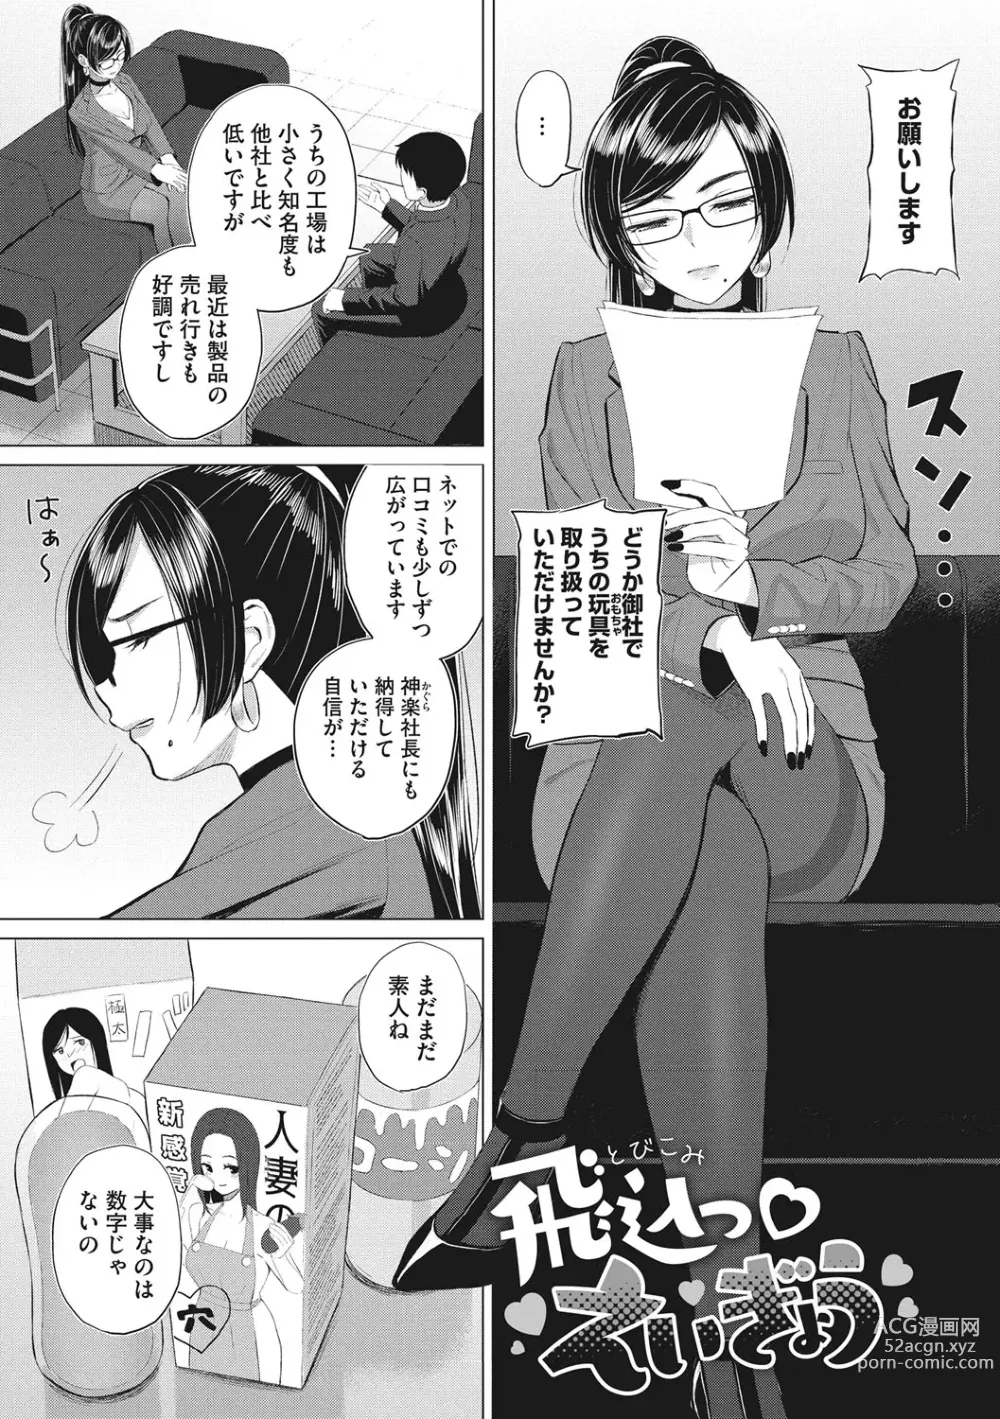 Page 4 of manga Hataraku Onna no Sei Jijou - Sexual Conditions for Working Women